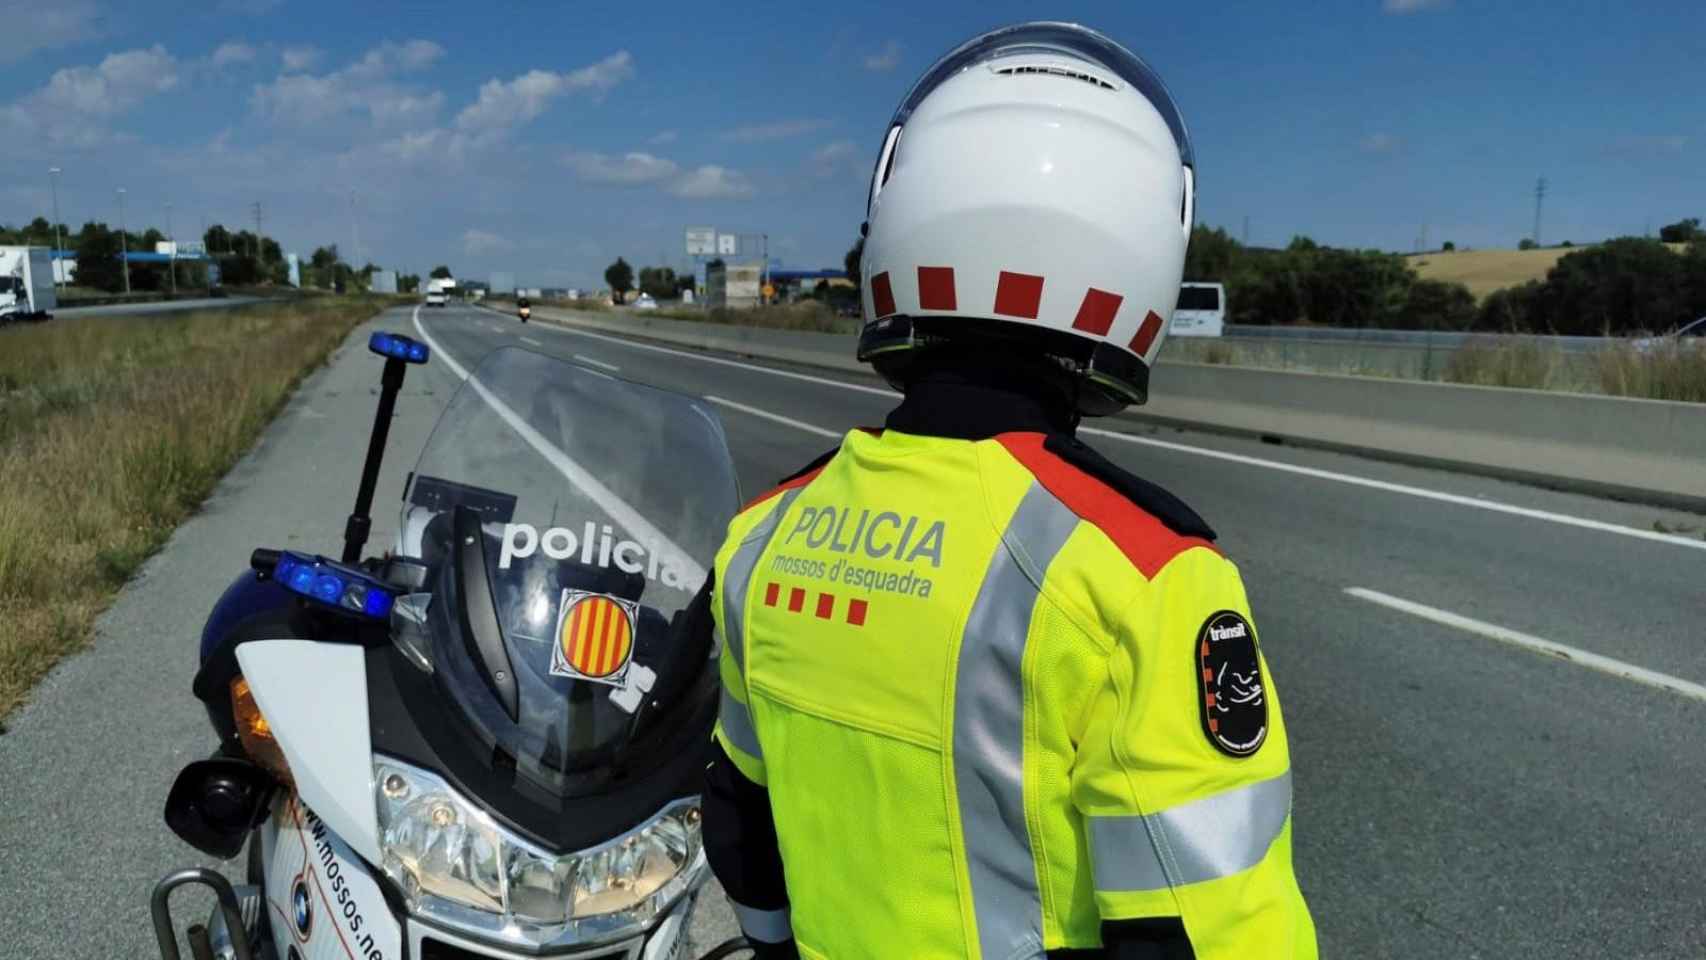 Una patrulla de tráfico de carreteras de los Mossos d'Esquadra en una imagen de archivo / MOSSOS D'ESQUADRA